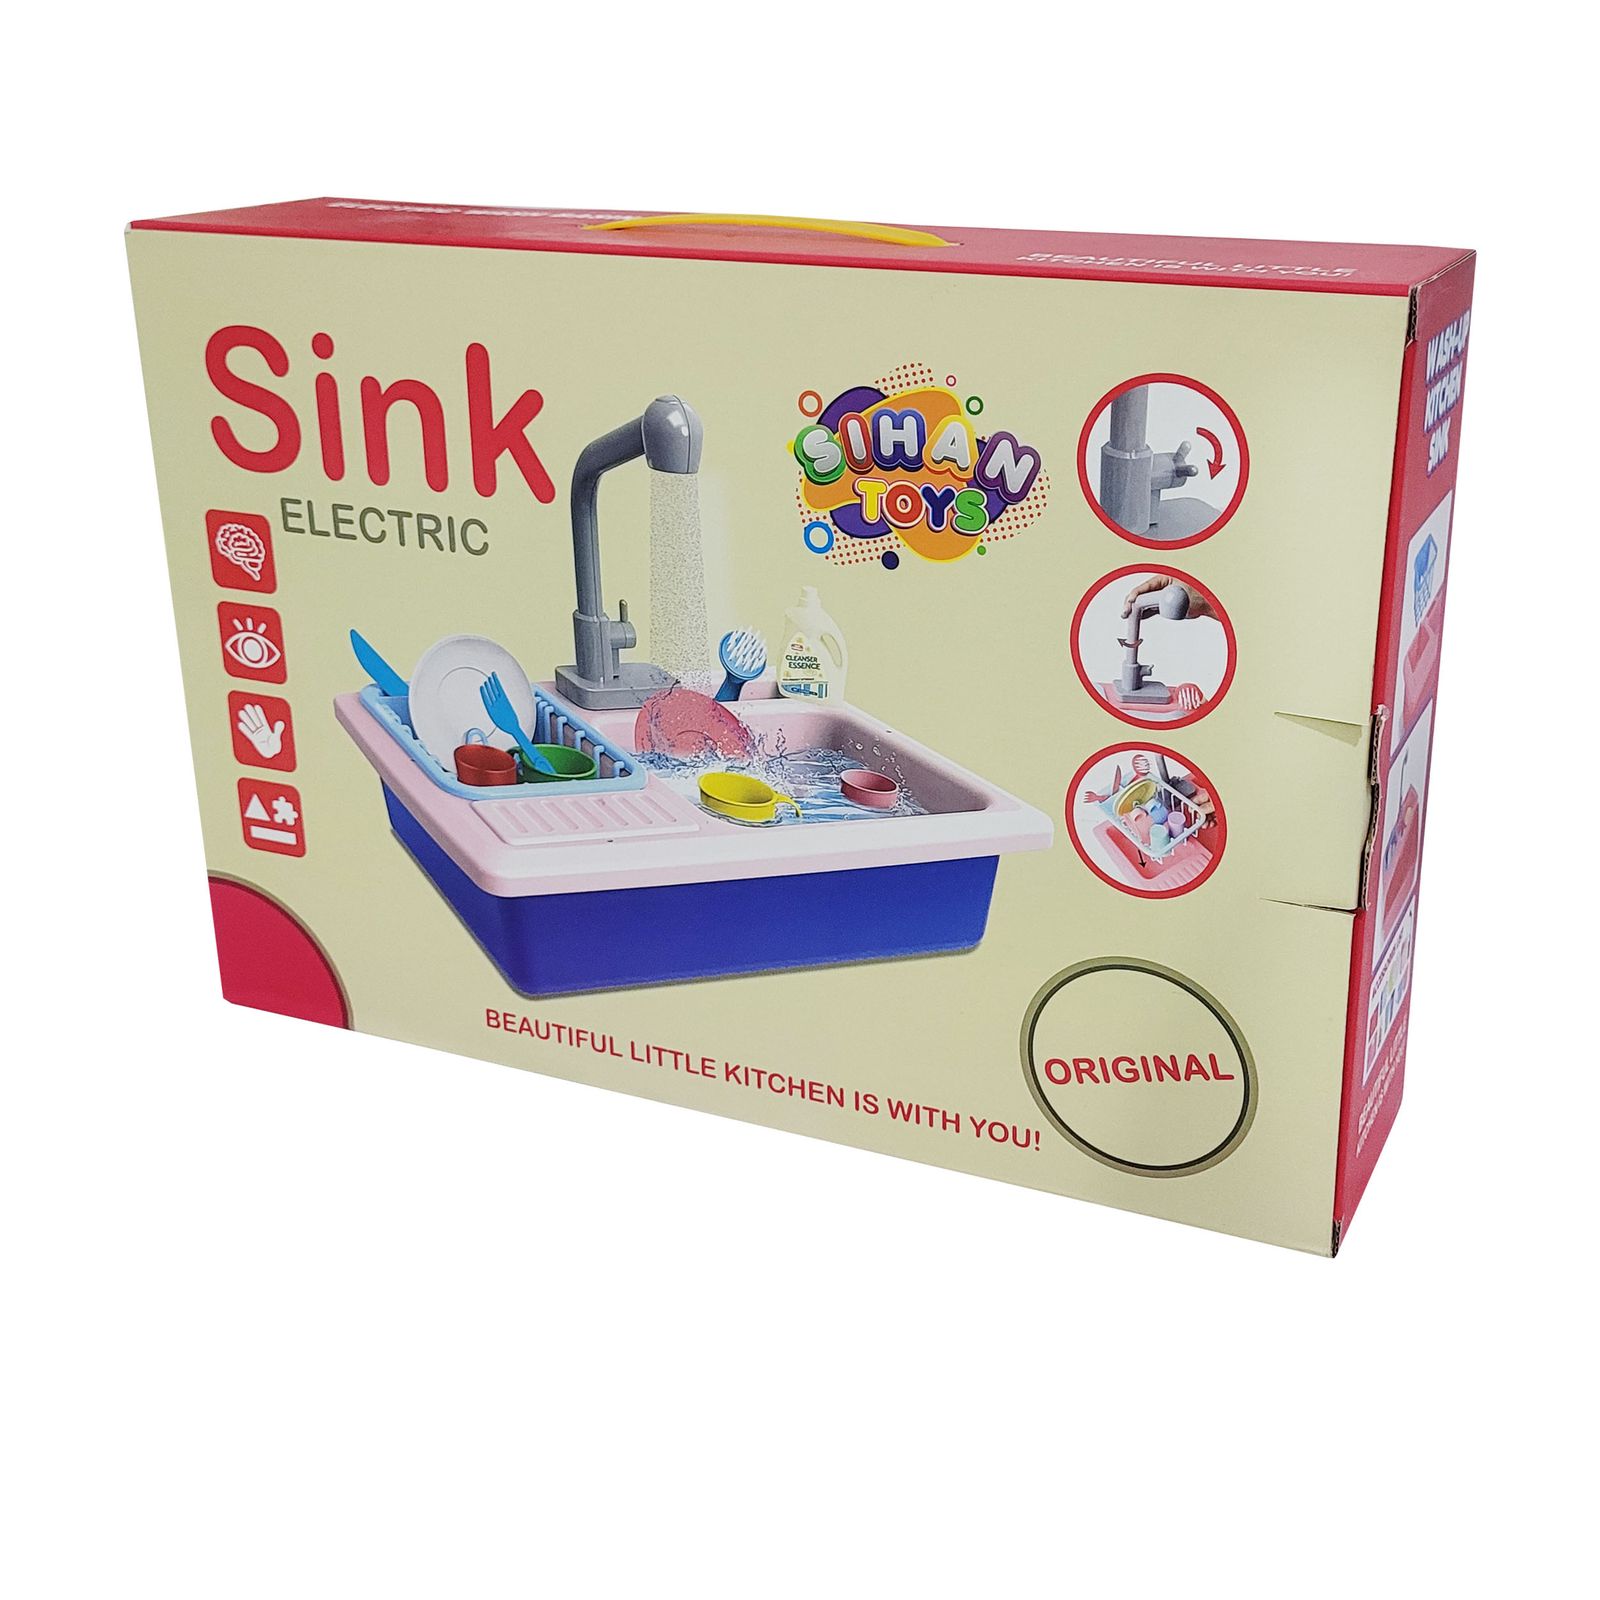 اسباب بازی سینک ظرفشویی مدل Sink ELECTRIC کد 0090877 -  - 6